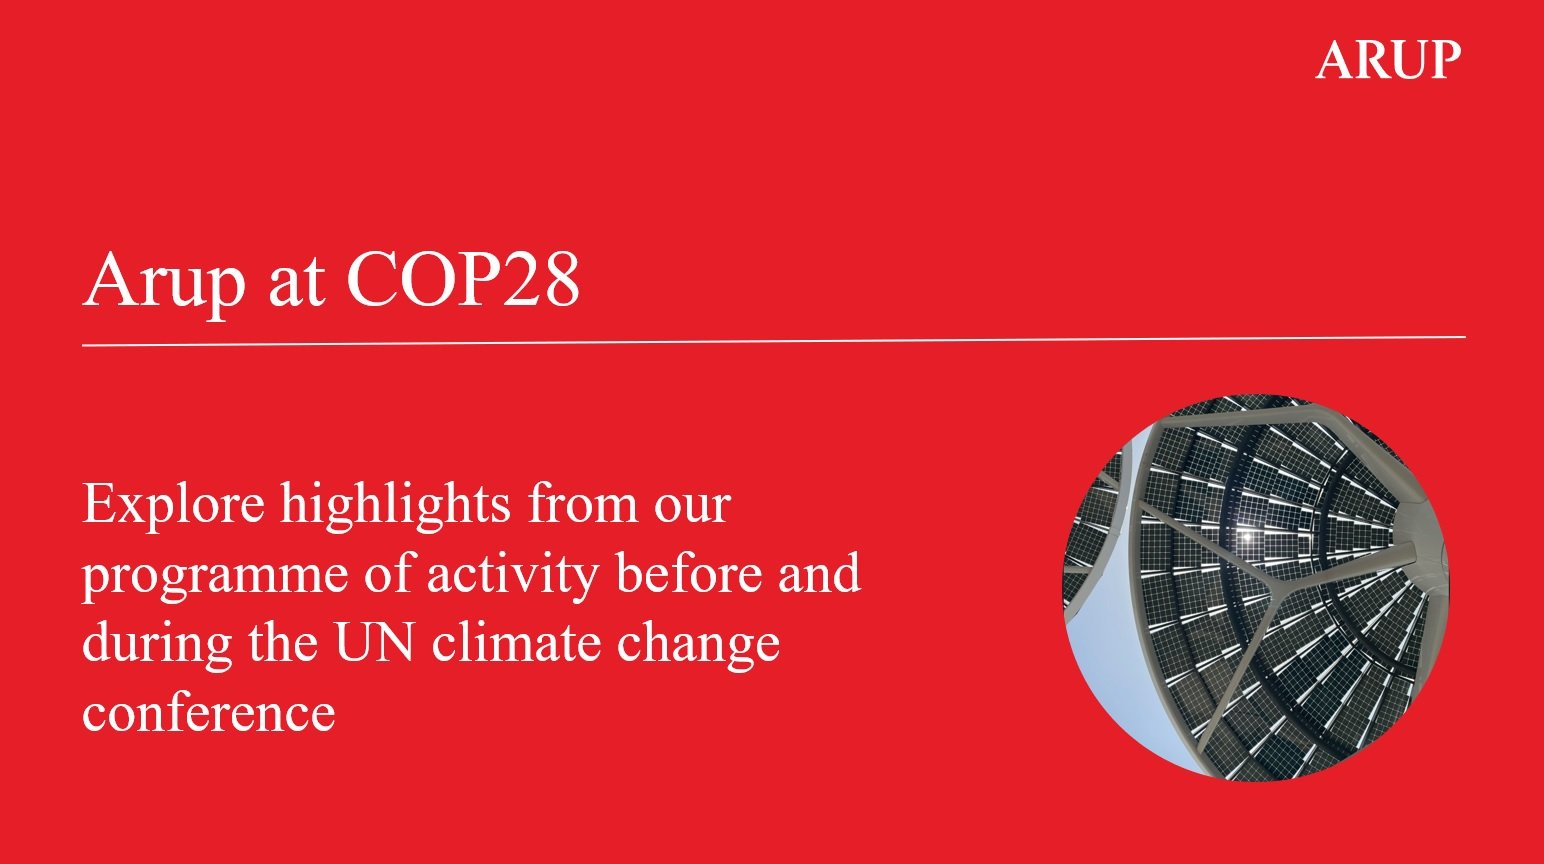 Arup's COP28 programme information card